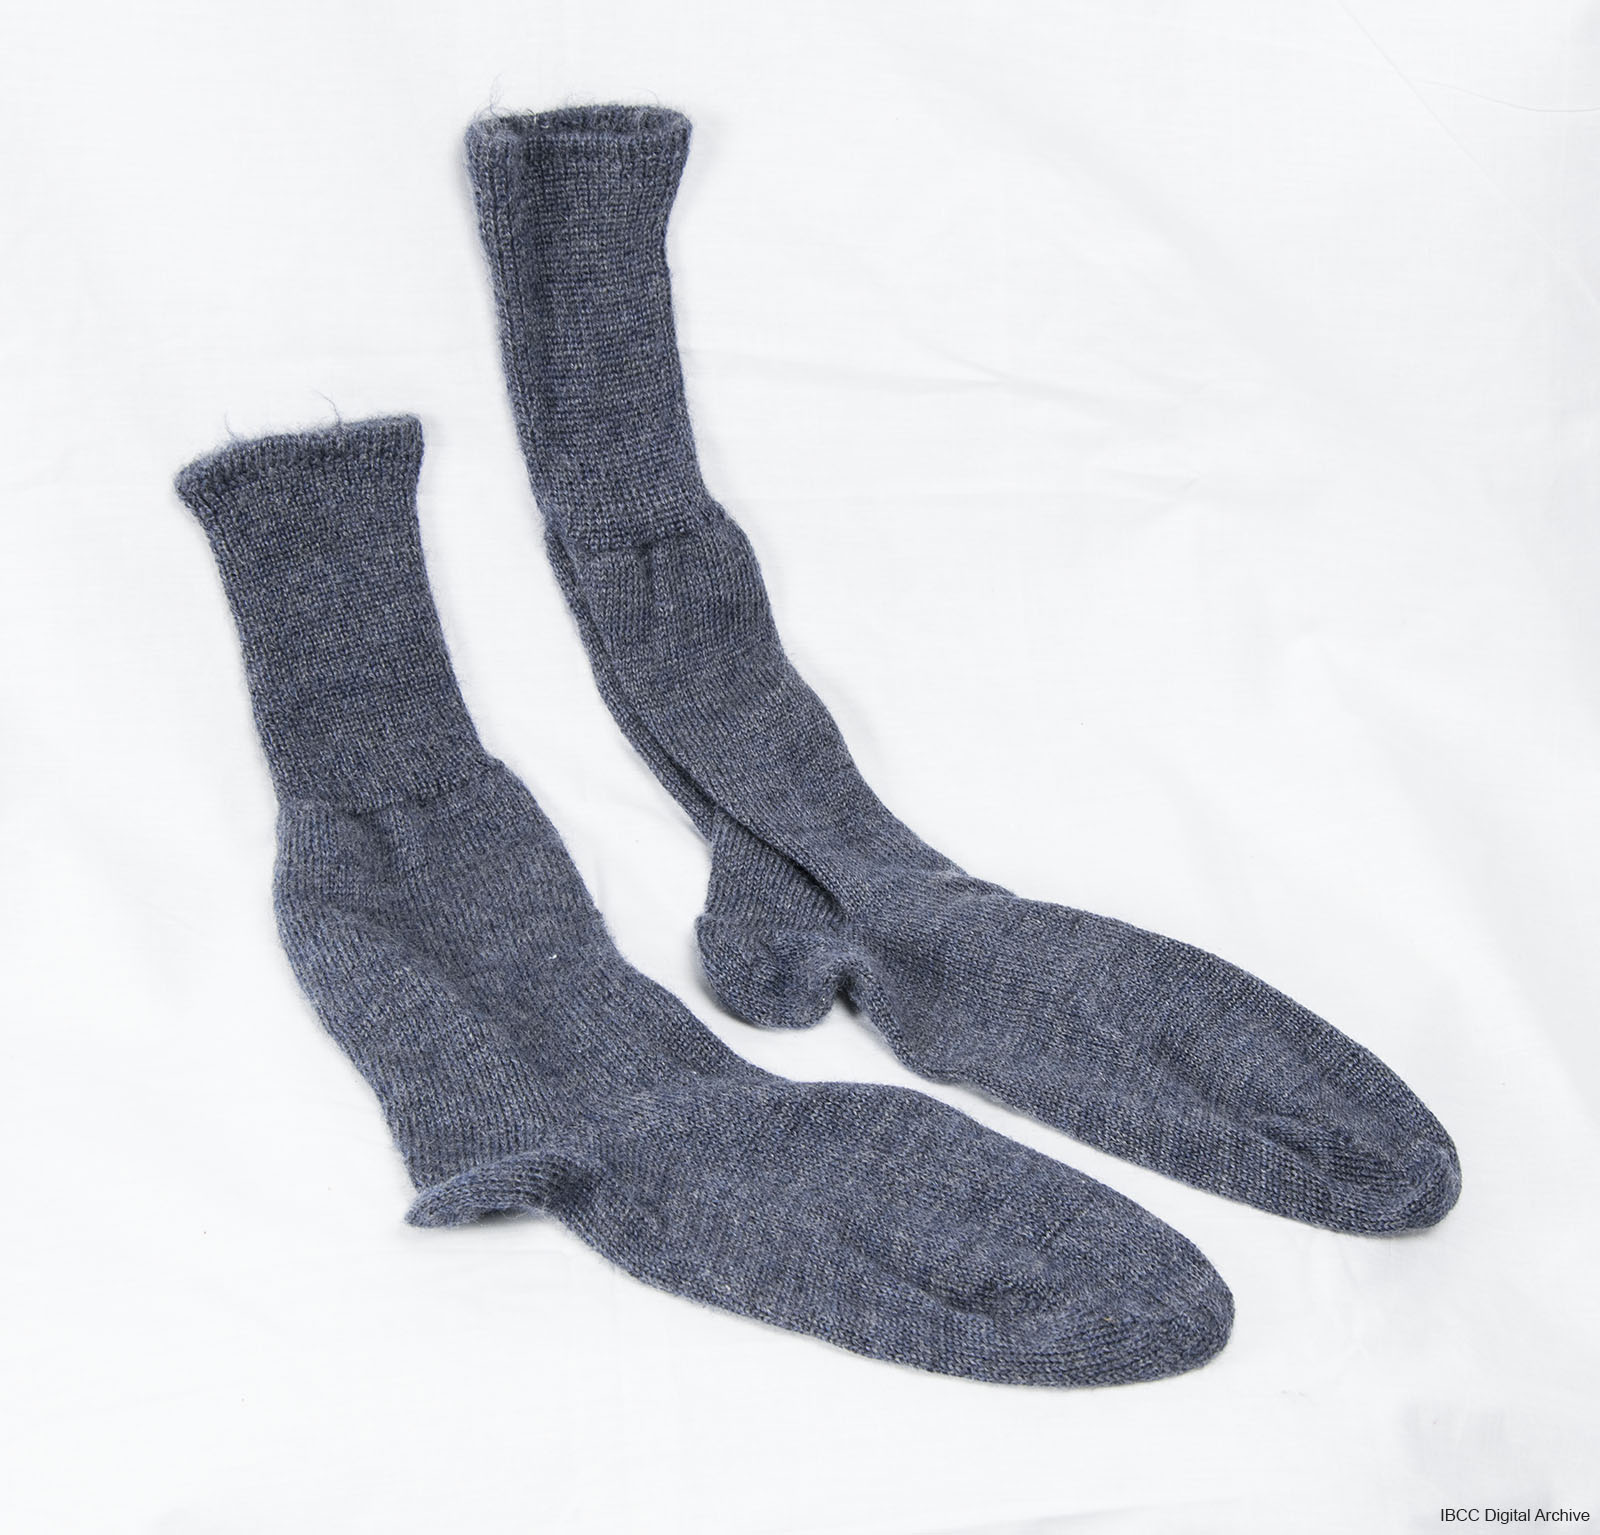 Pair of socks · IBCC Digital Archive